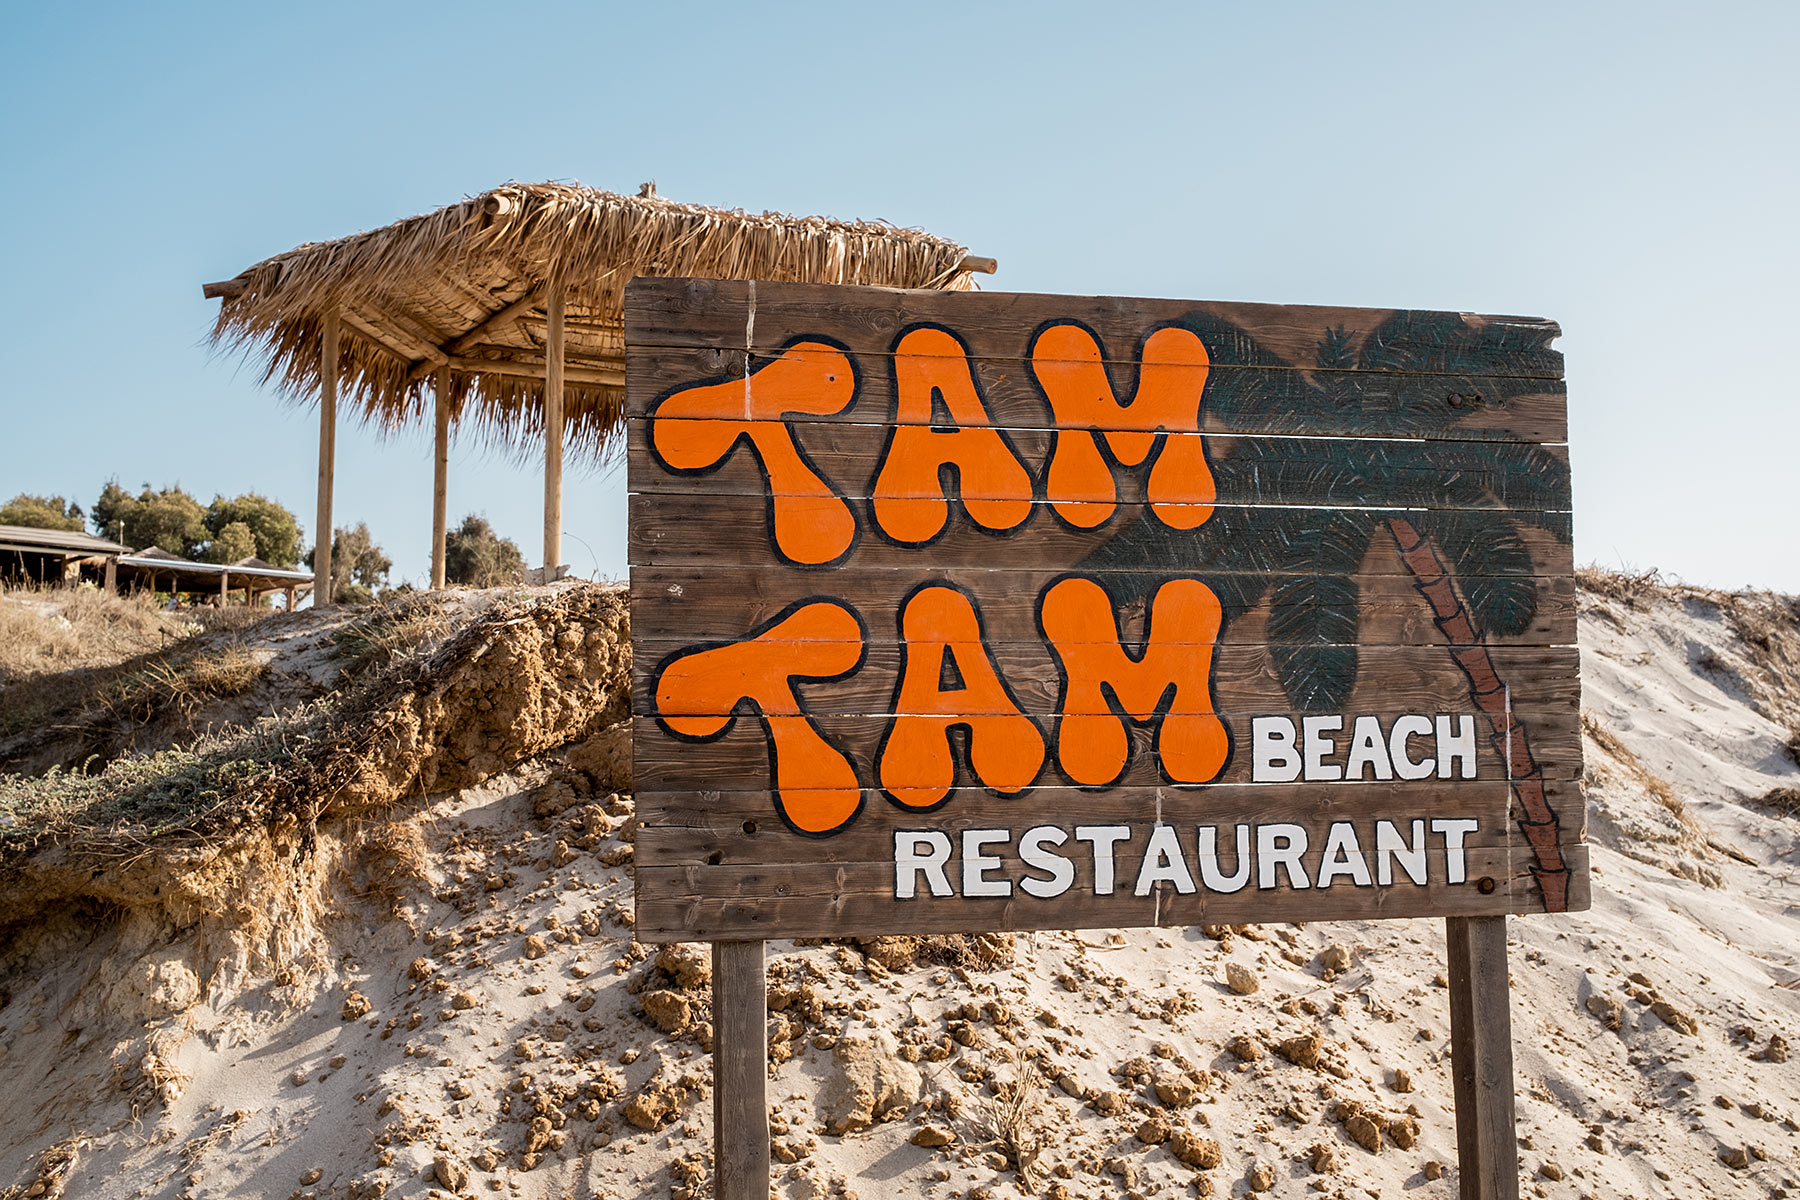 tam tam restaurant beach bar kos griechenland travel blog sunnyinga